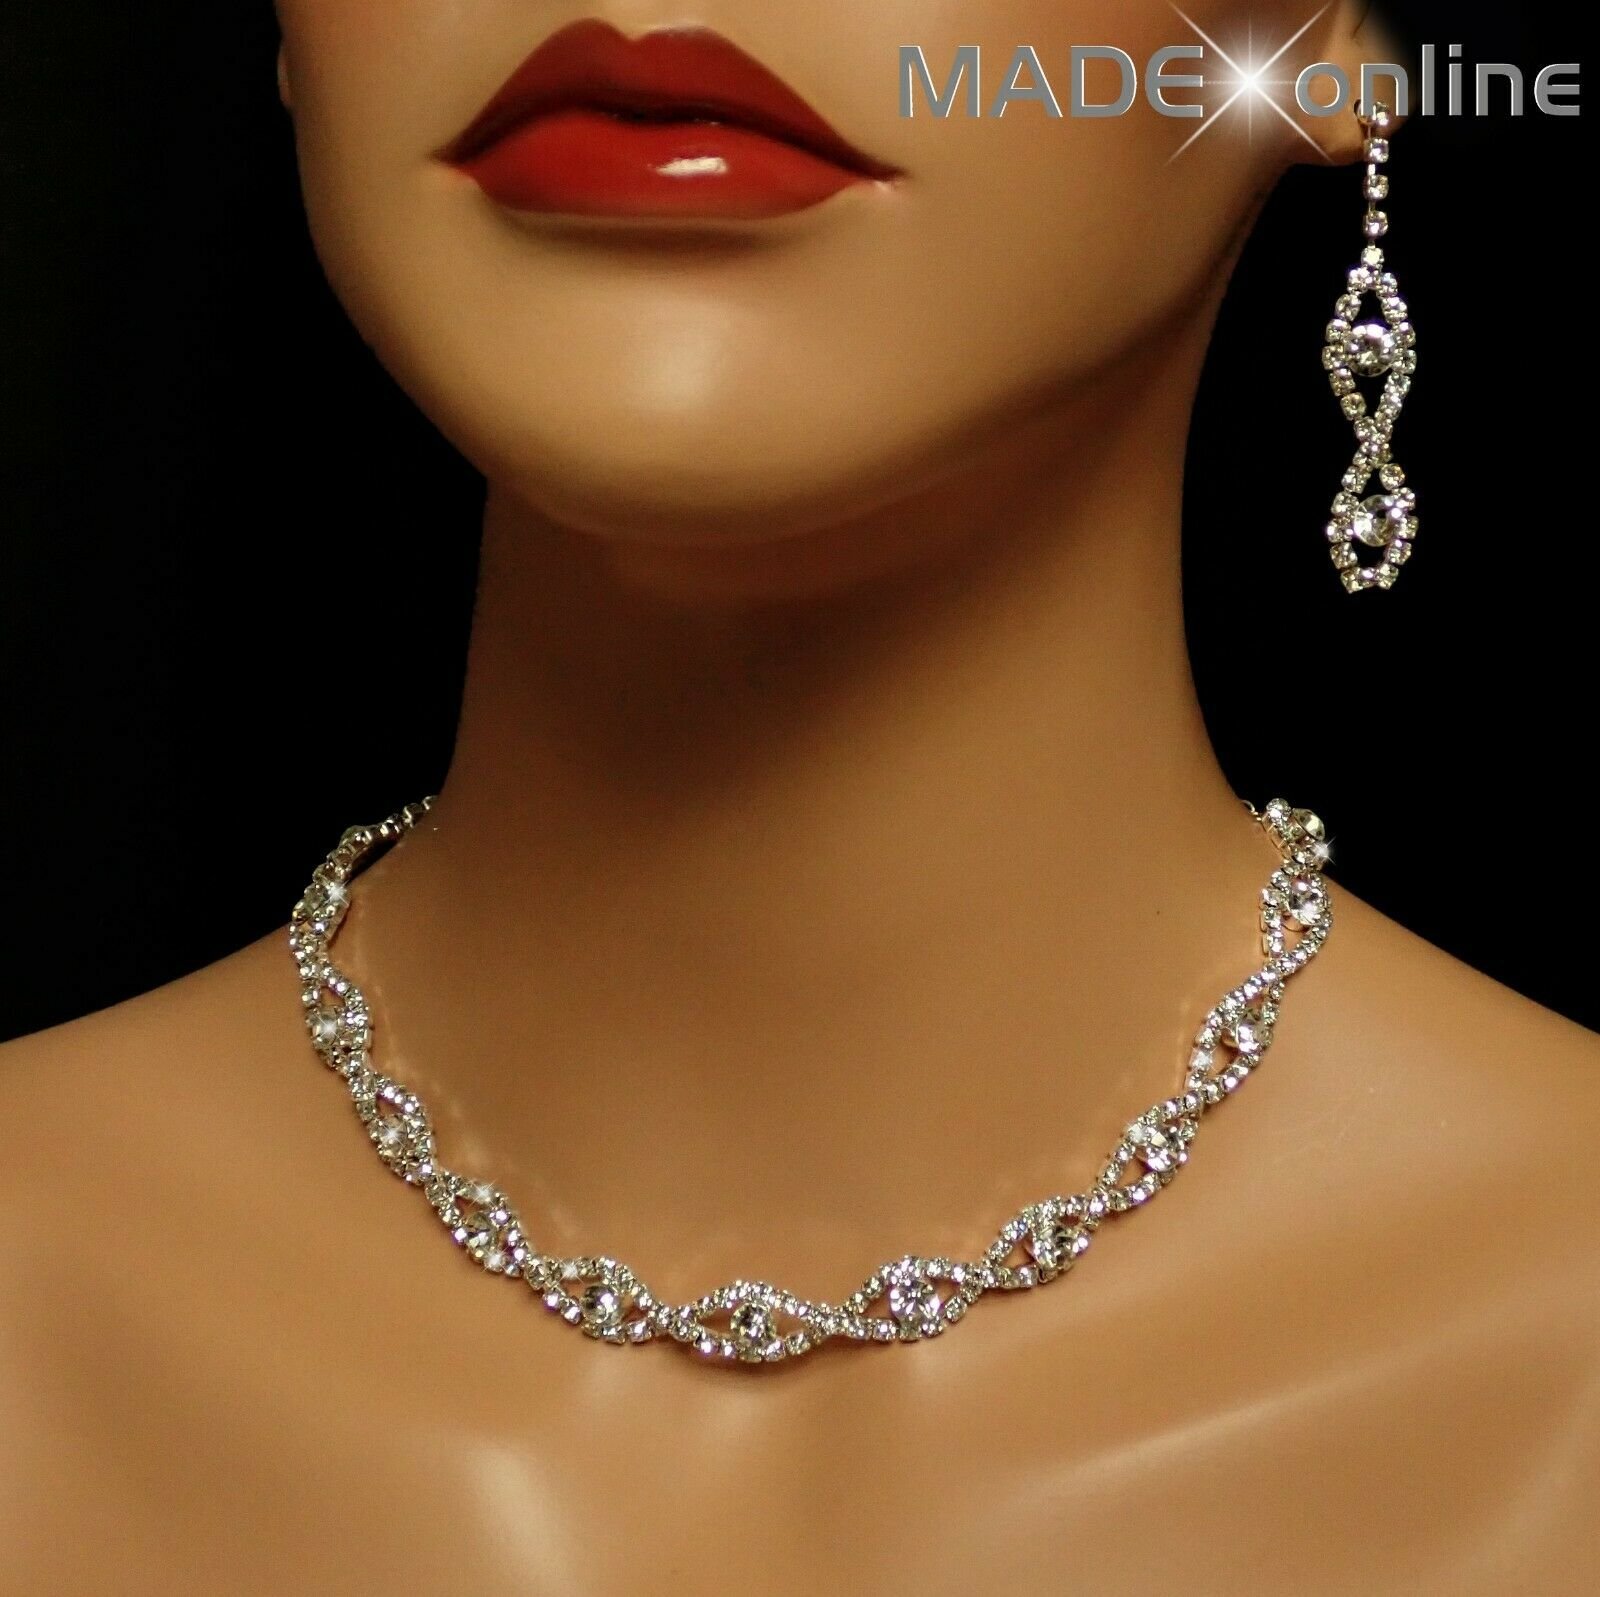 Buy ICHQ Fashion Women's Charm Wedding Bridal Crystal Diamante Rhinestone Necklace  Earrings Jewelry Set for Bridal (White) at Amazon.in